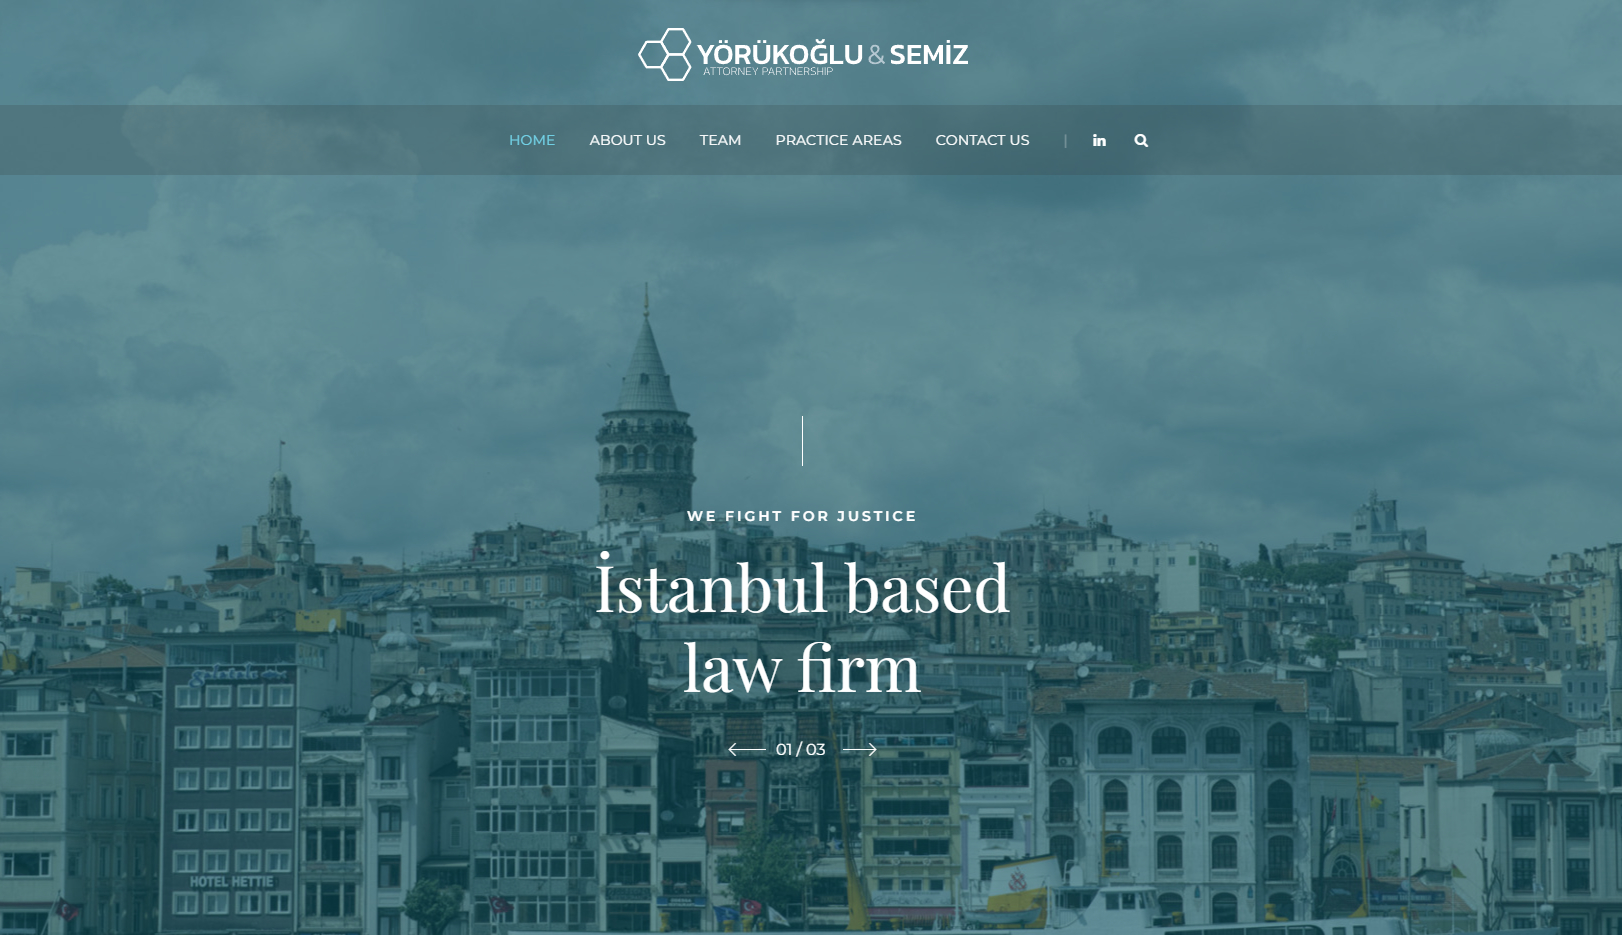 Yorukoglu & Semiz Attorney Partnership